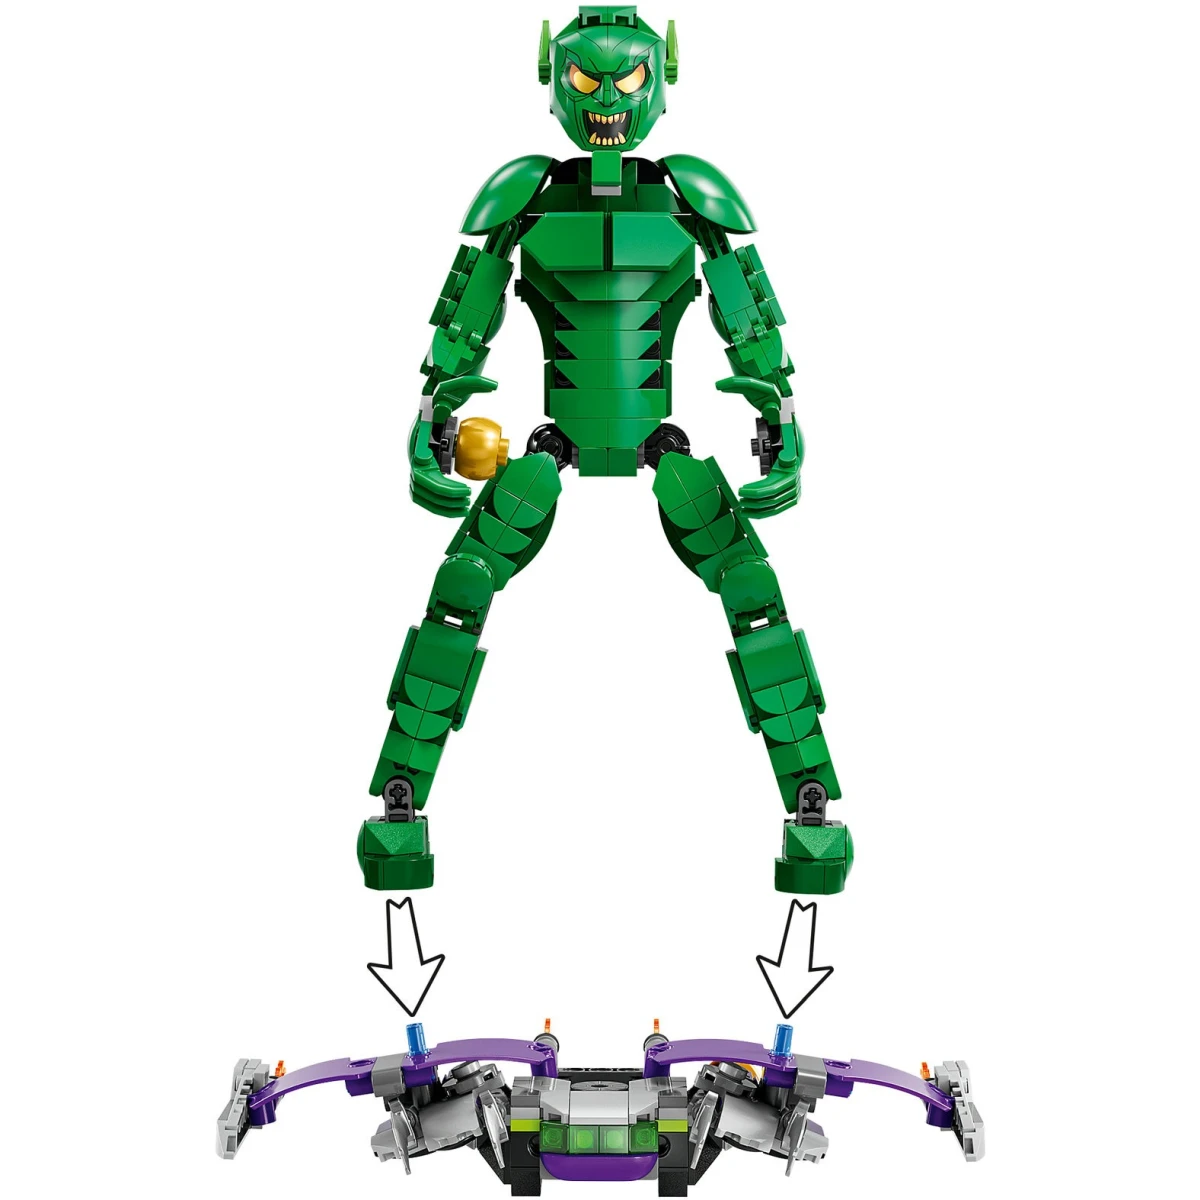 LEGO® Marvel Green Goblin Baufigur 76284